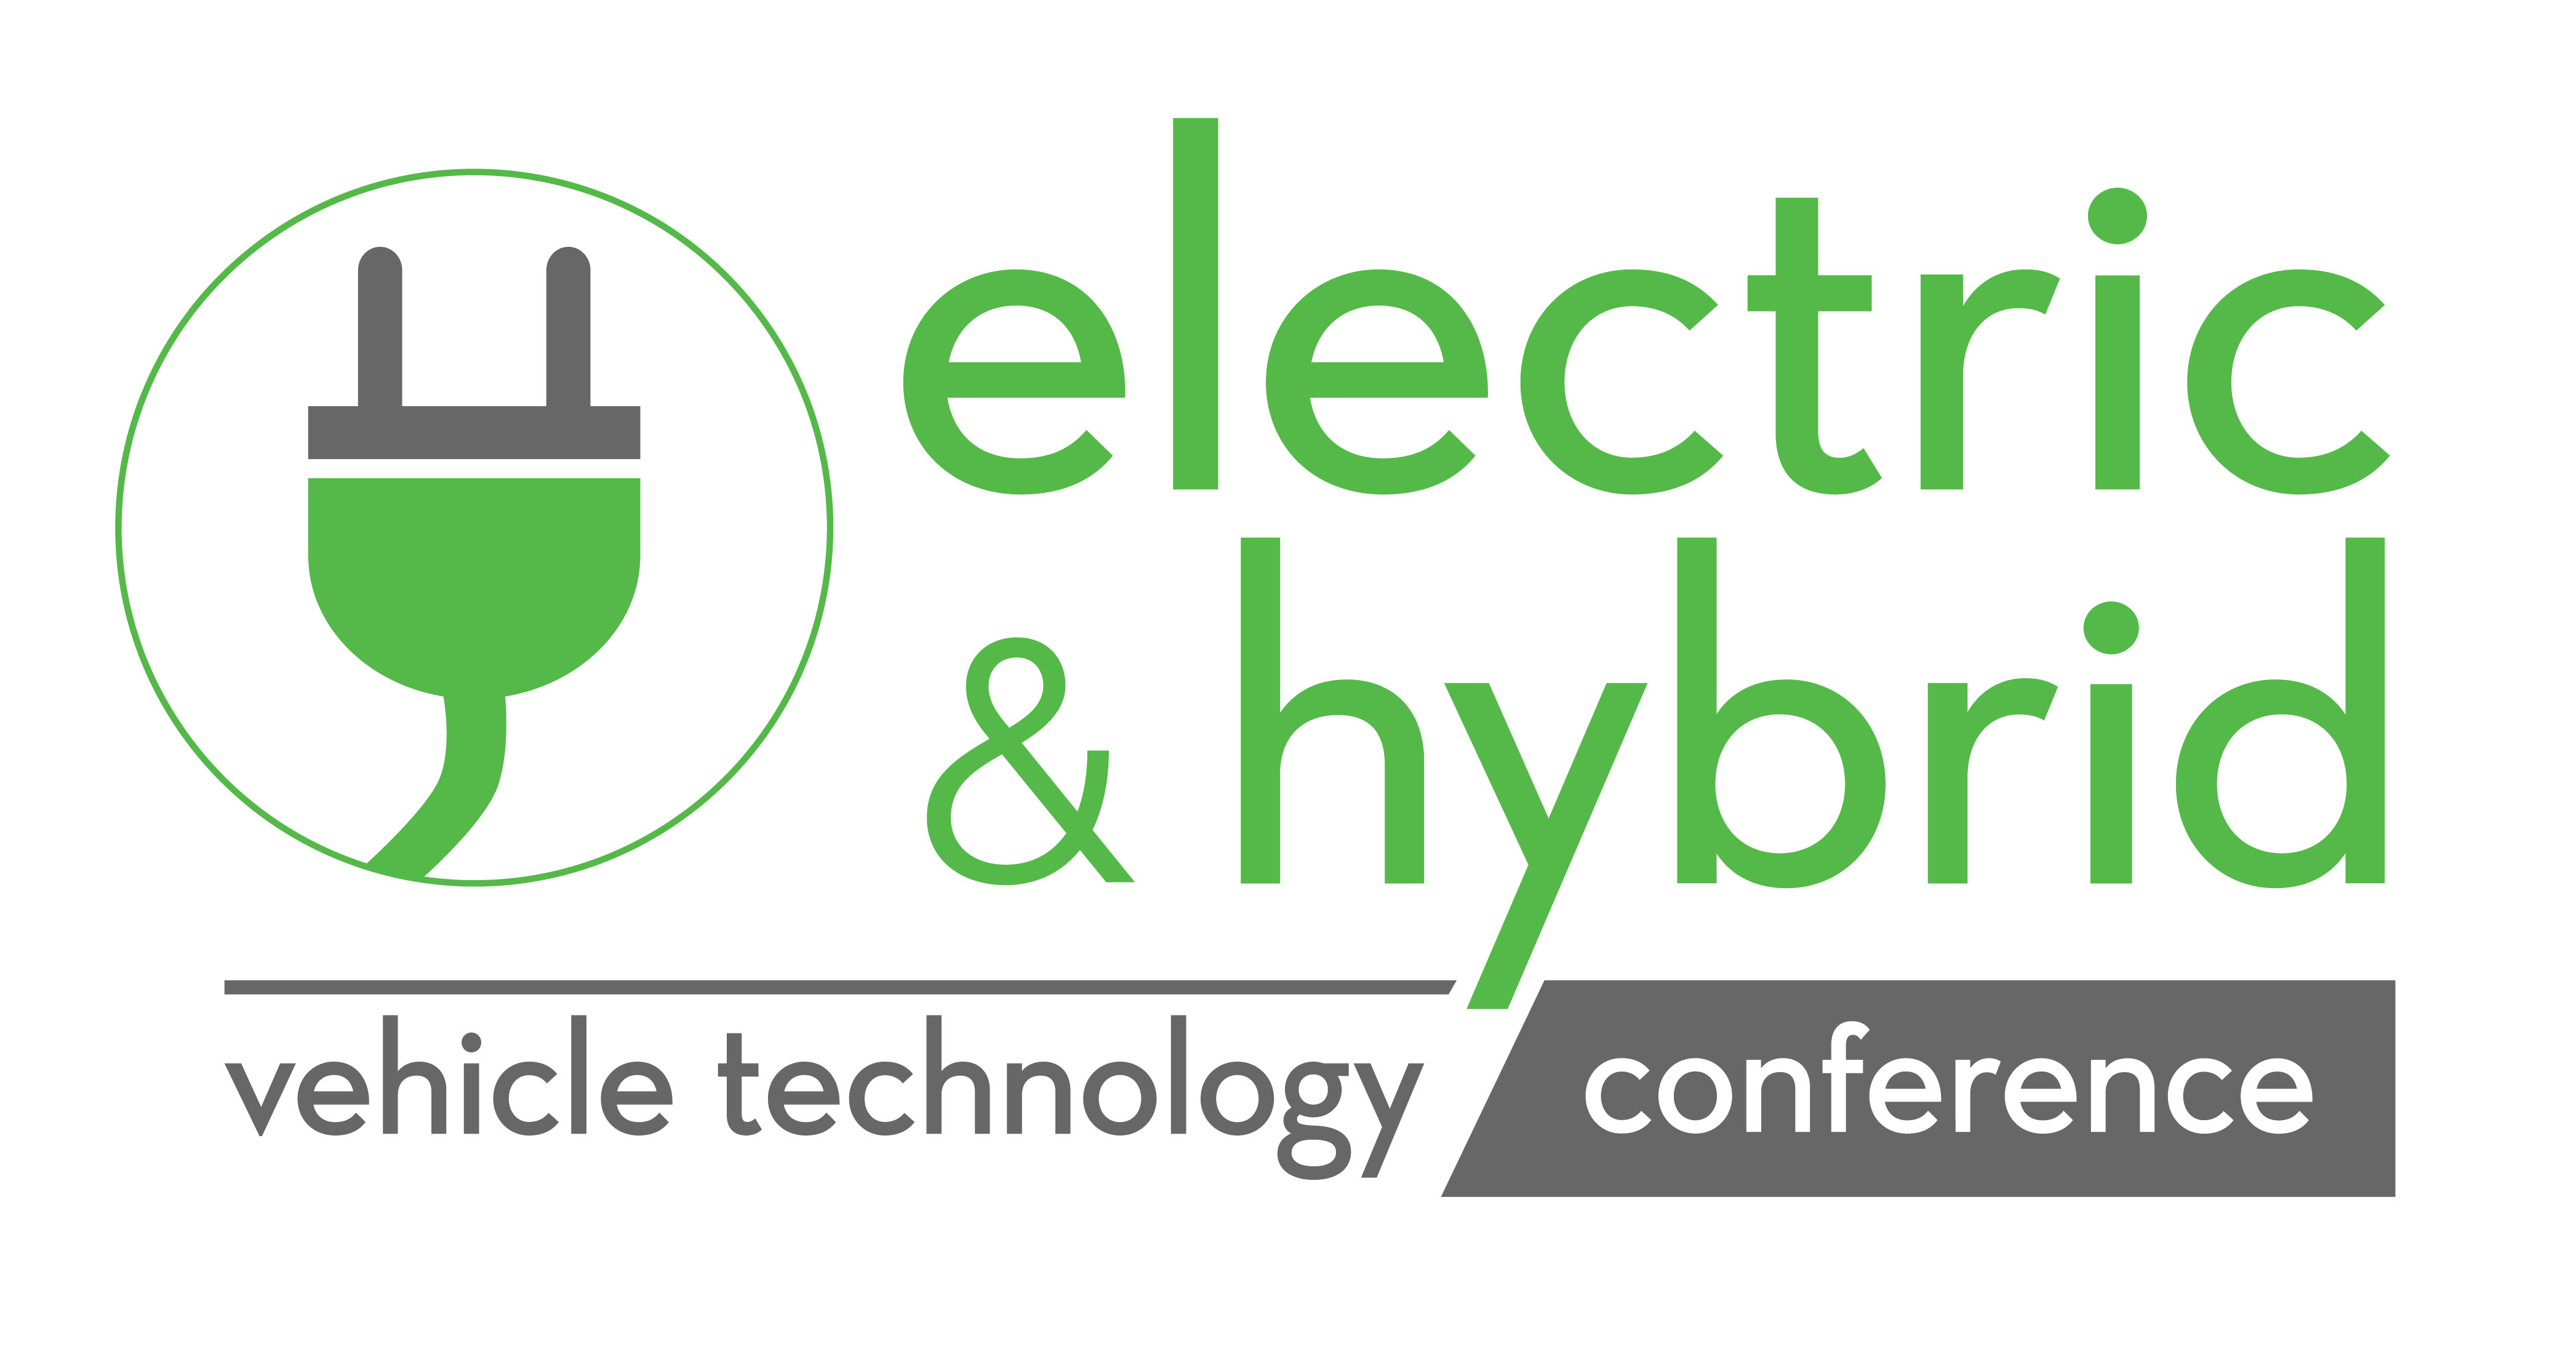 Electric & Hybrid Vehicle Technology Expo